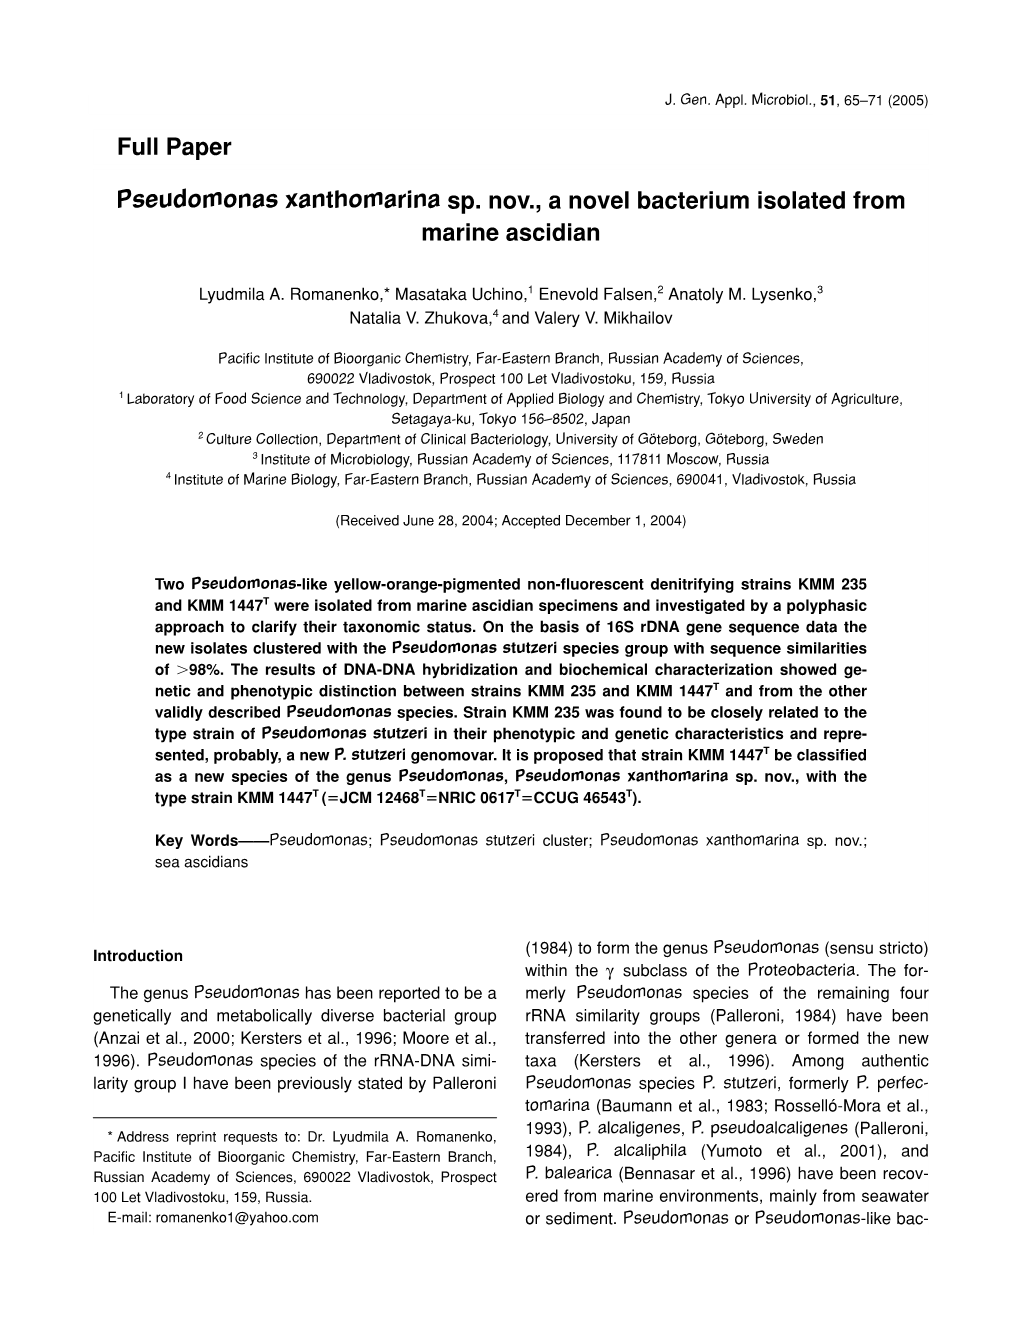 Pseudomonas Xanthomarina Sp. Nov., a Novel Bacterium Isolated from Marine Ascidian